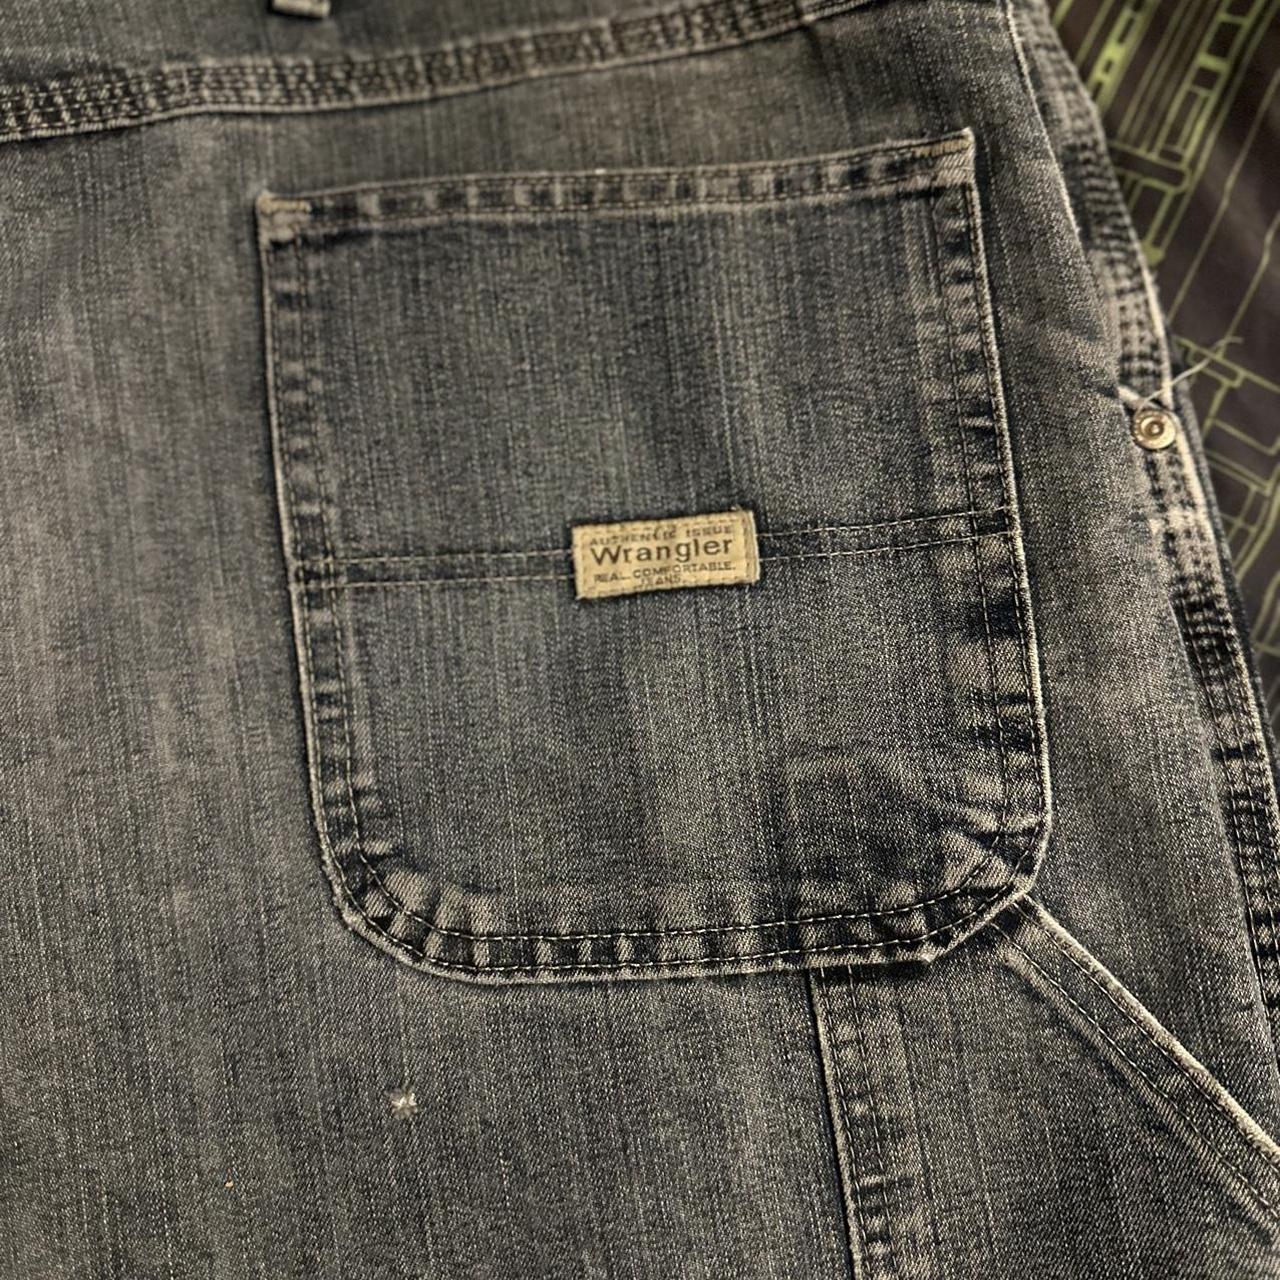 Super nice wrangler jeans 42x30. Overall super clean... - Depop